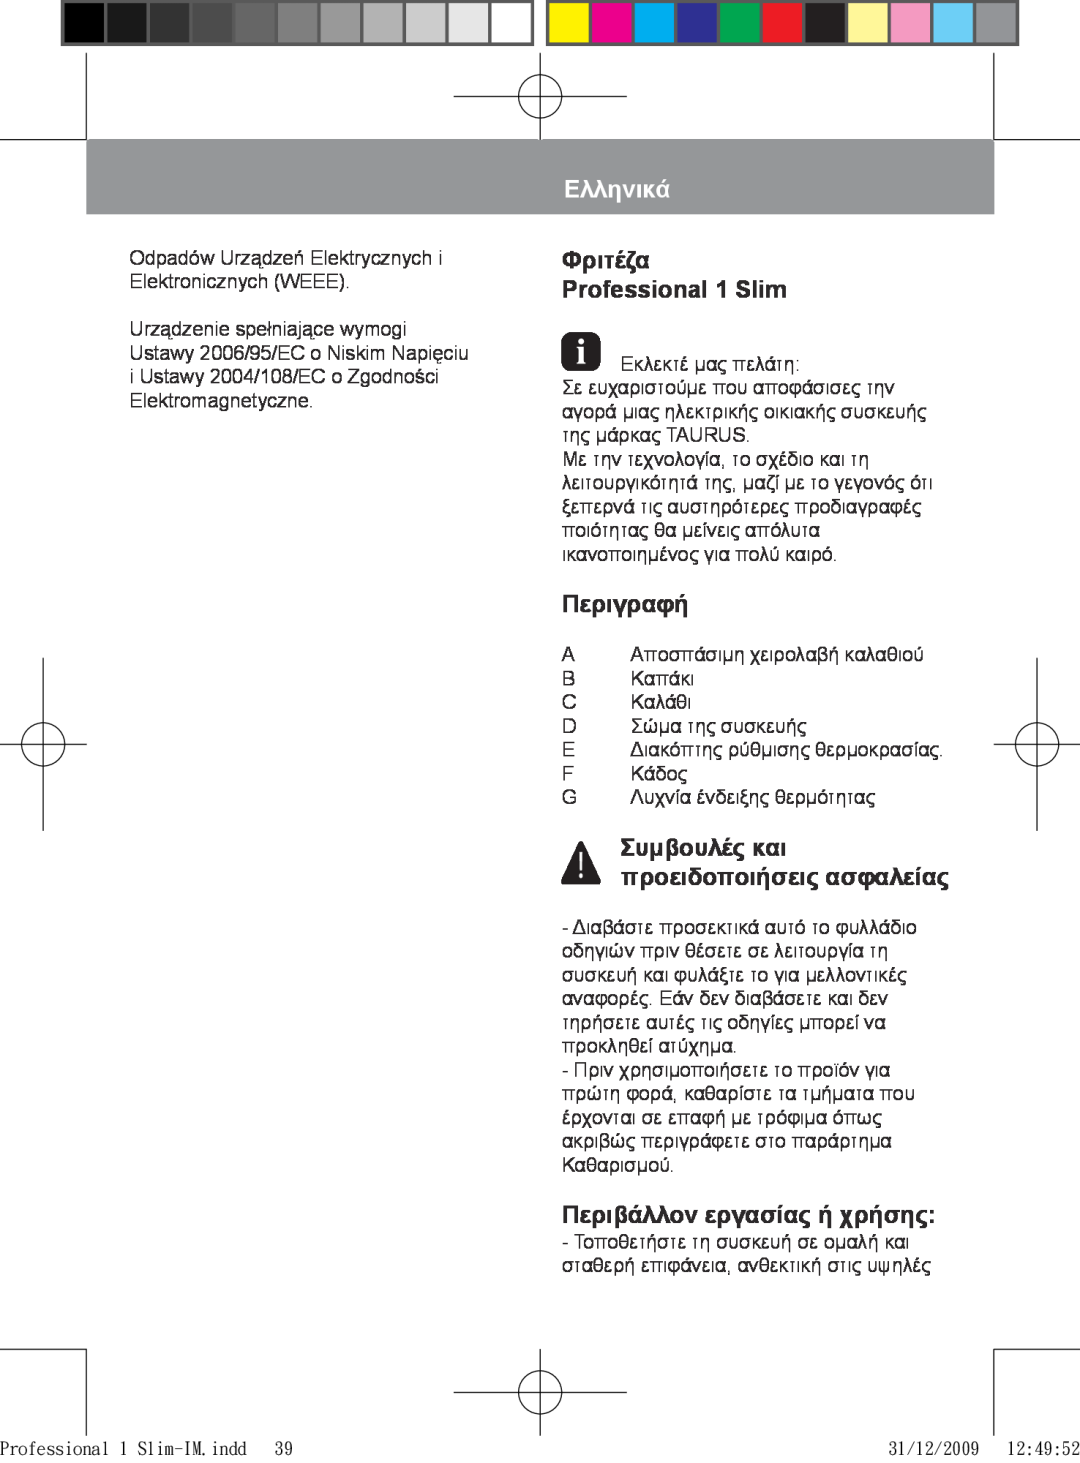 Taurus Group manual Ελληνικά, Περιγραφή, Περιβάλλον εργασίας ή χρήσης, Φριτέζα Professional 1 Slim 